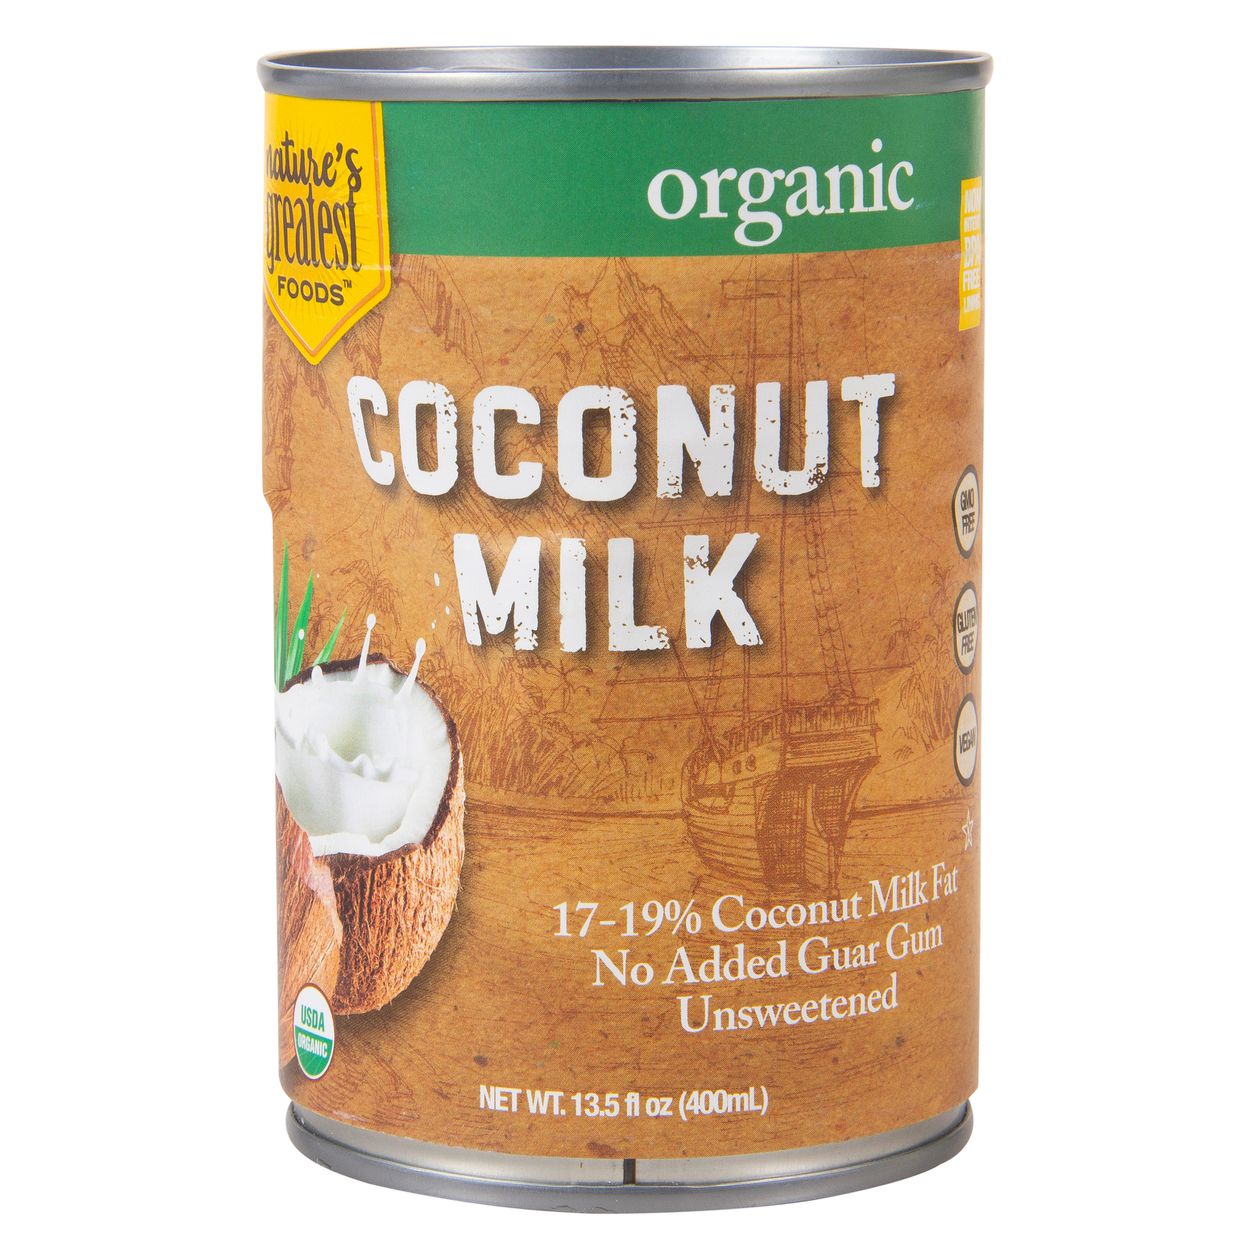 Nature's Greatest Foods Coconut Milk, Organic - 13.5 oz